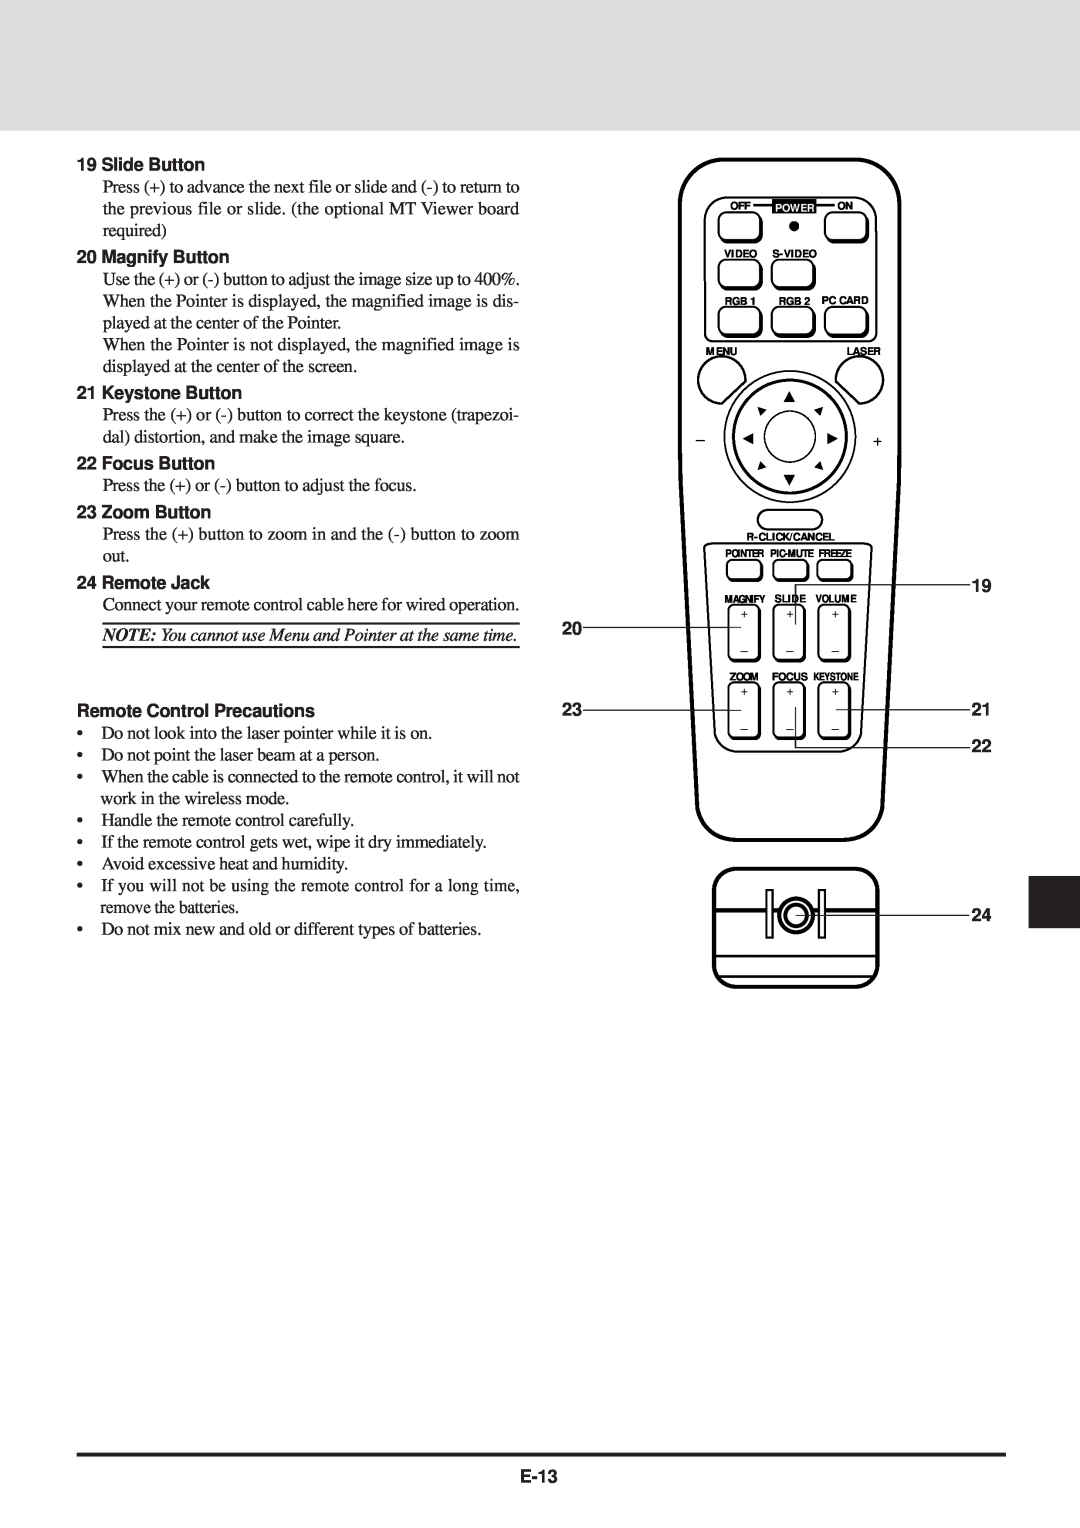 NEC MT830 user manual Slide Button, Magnify Button, Keystone Button, Focus Button, Zoom Button, Remote Jack, E-13 